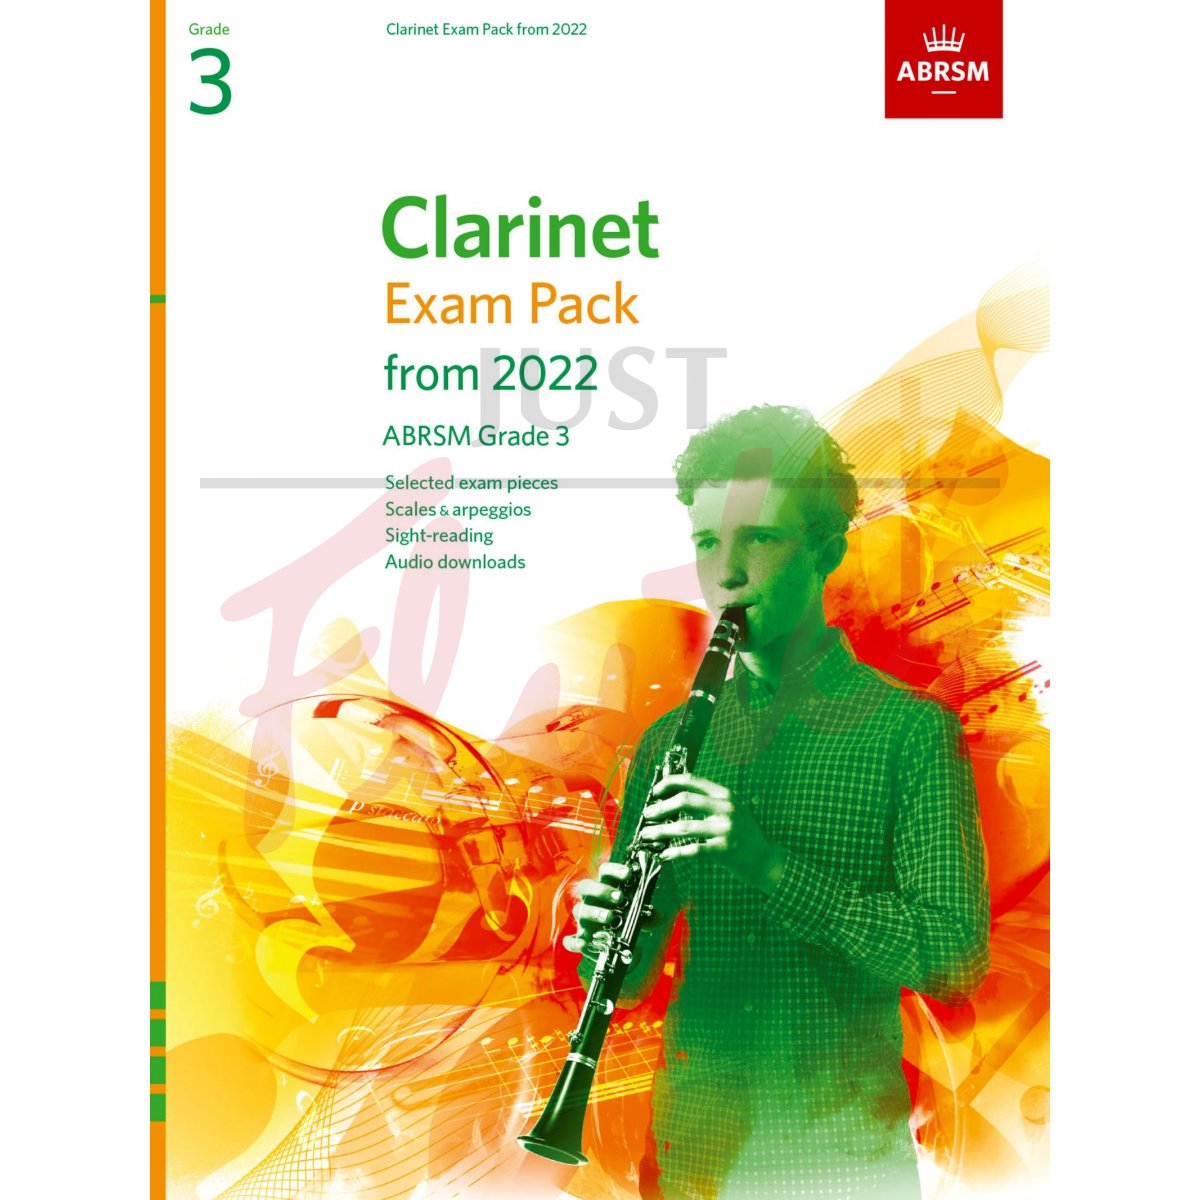 Clarinet Exam Pack from 2022 Grade 3